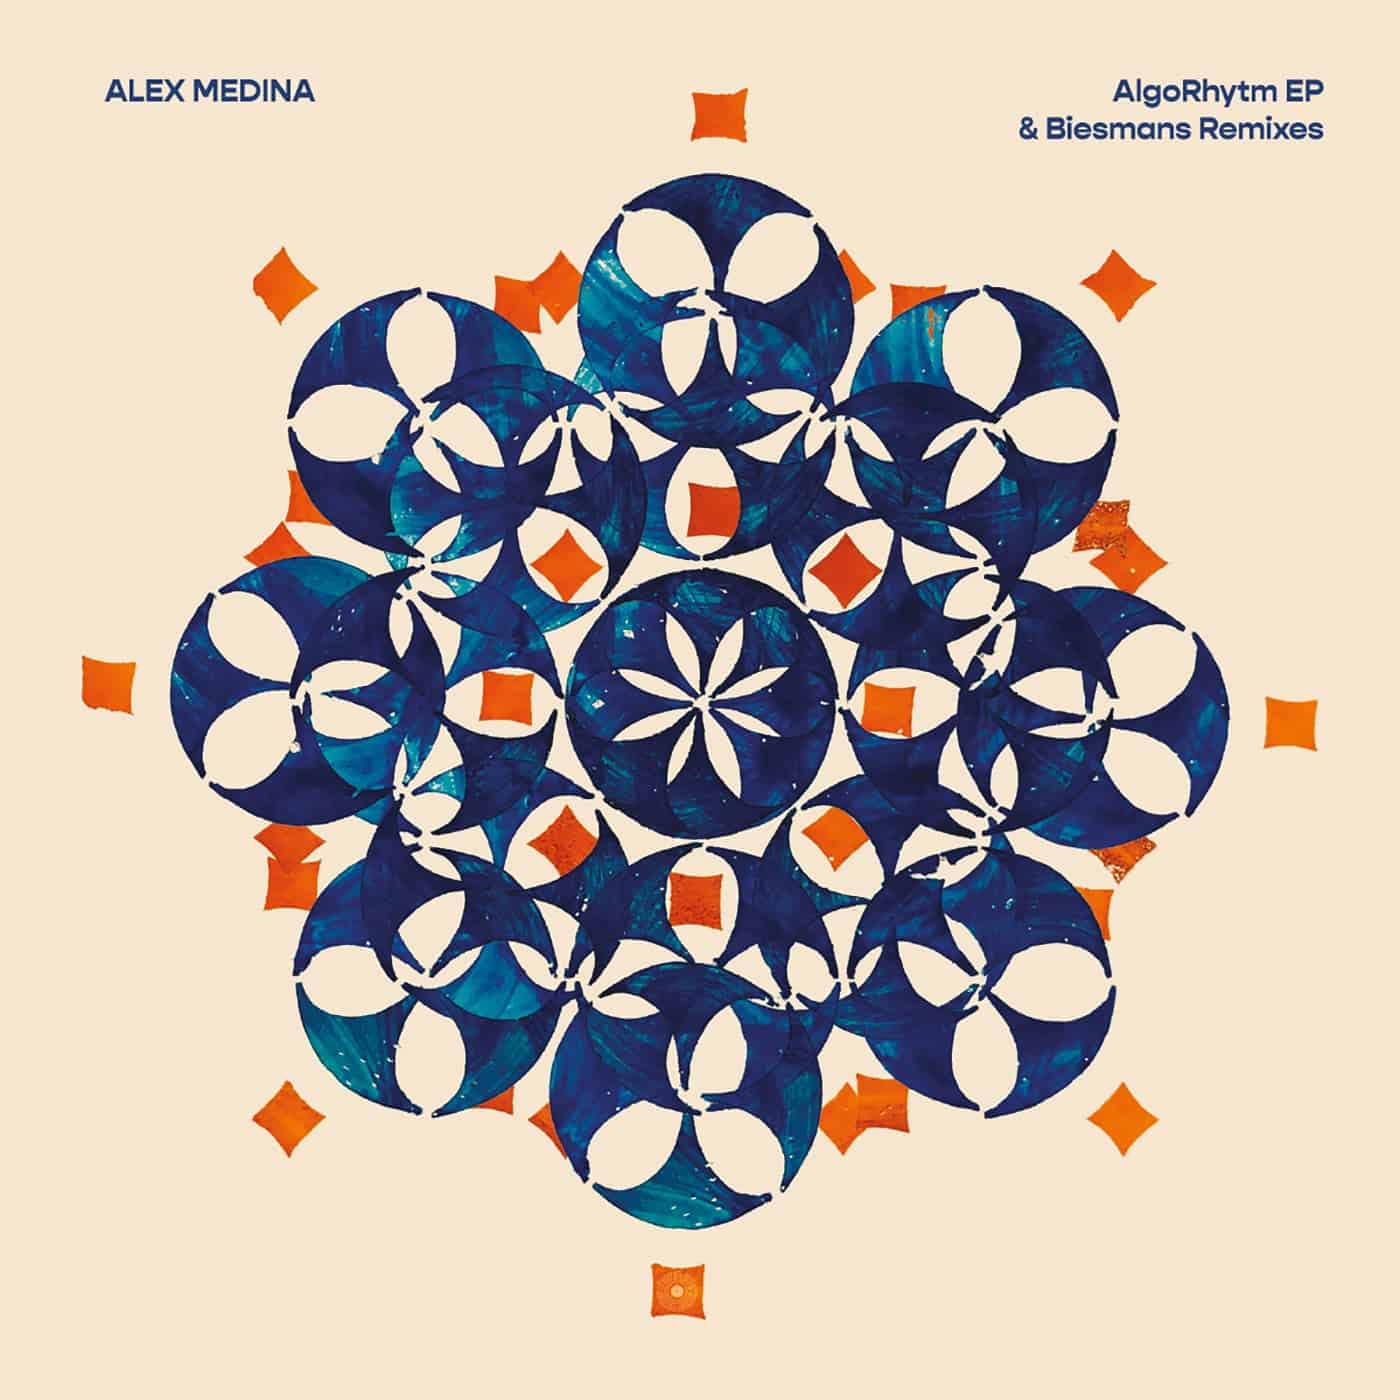 Download AlgoRhytm EP & Biesmans Remixes on Electrobuzz